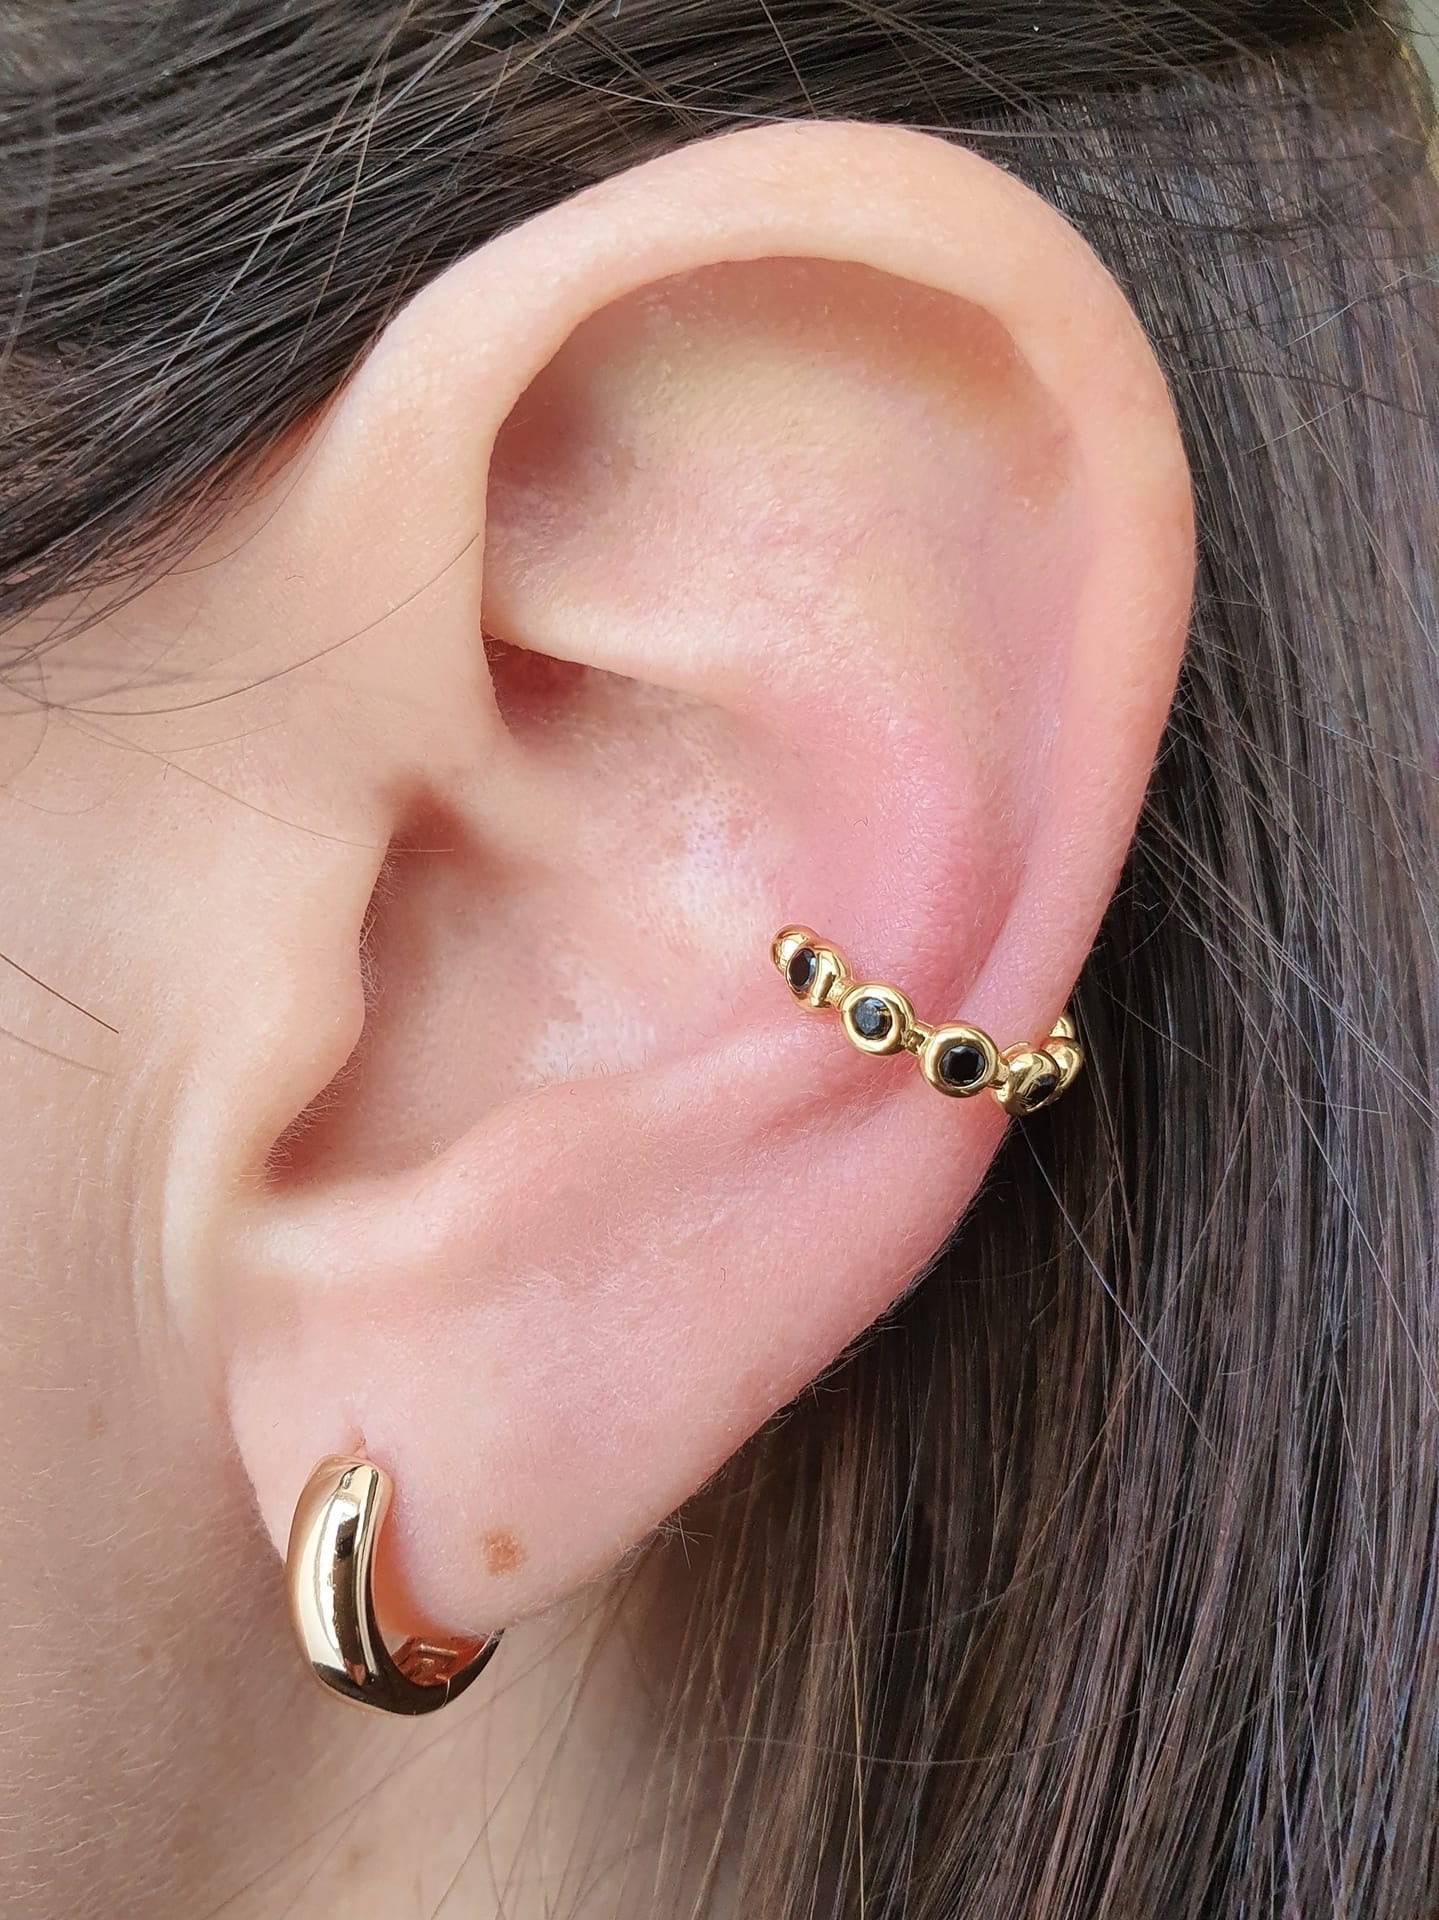 Ear cuff “Roby” gold con pietre nere - 333HOPE333